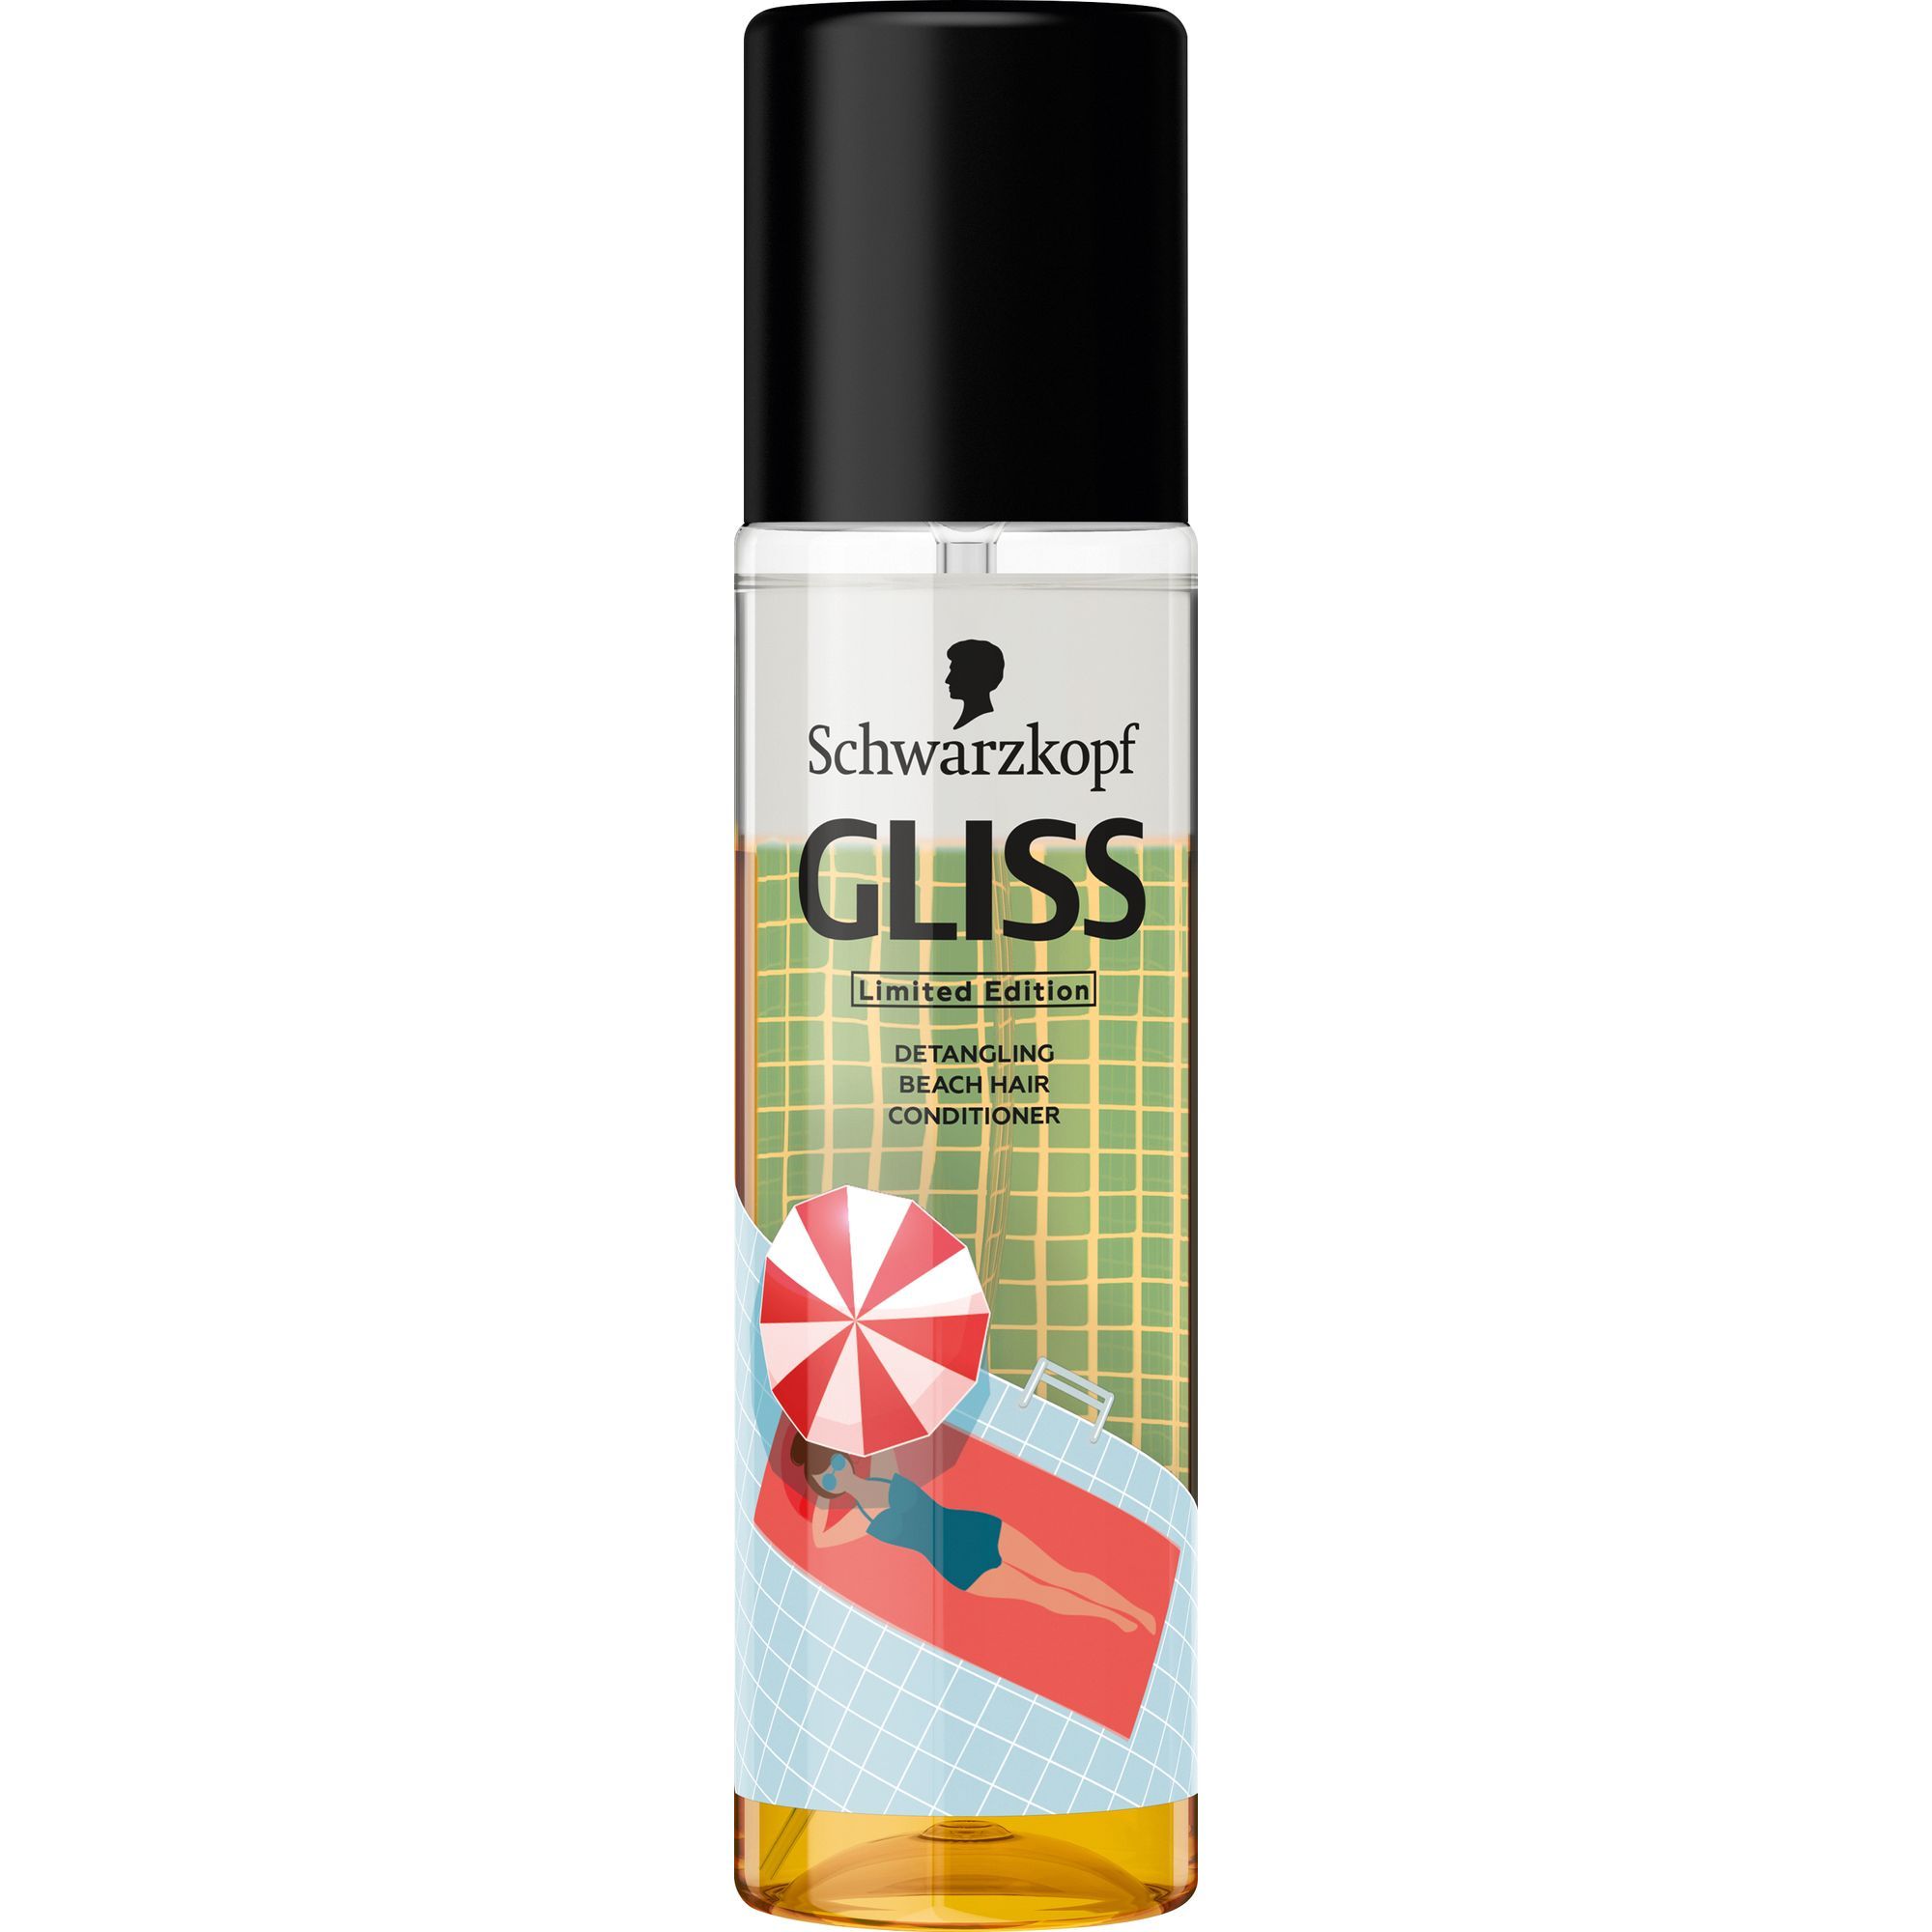 Henkel Beauty Spray Conditoner Summer Repair Gliss (200ml)